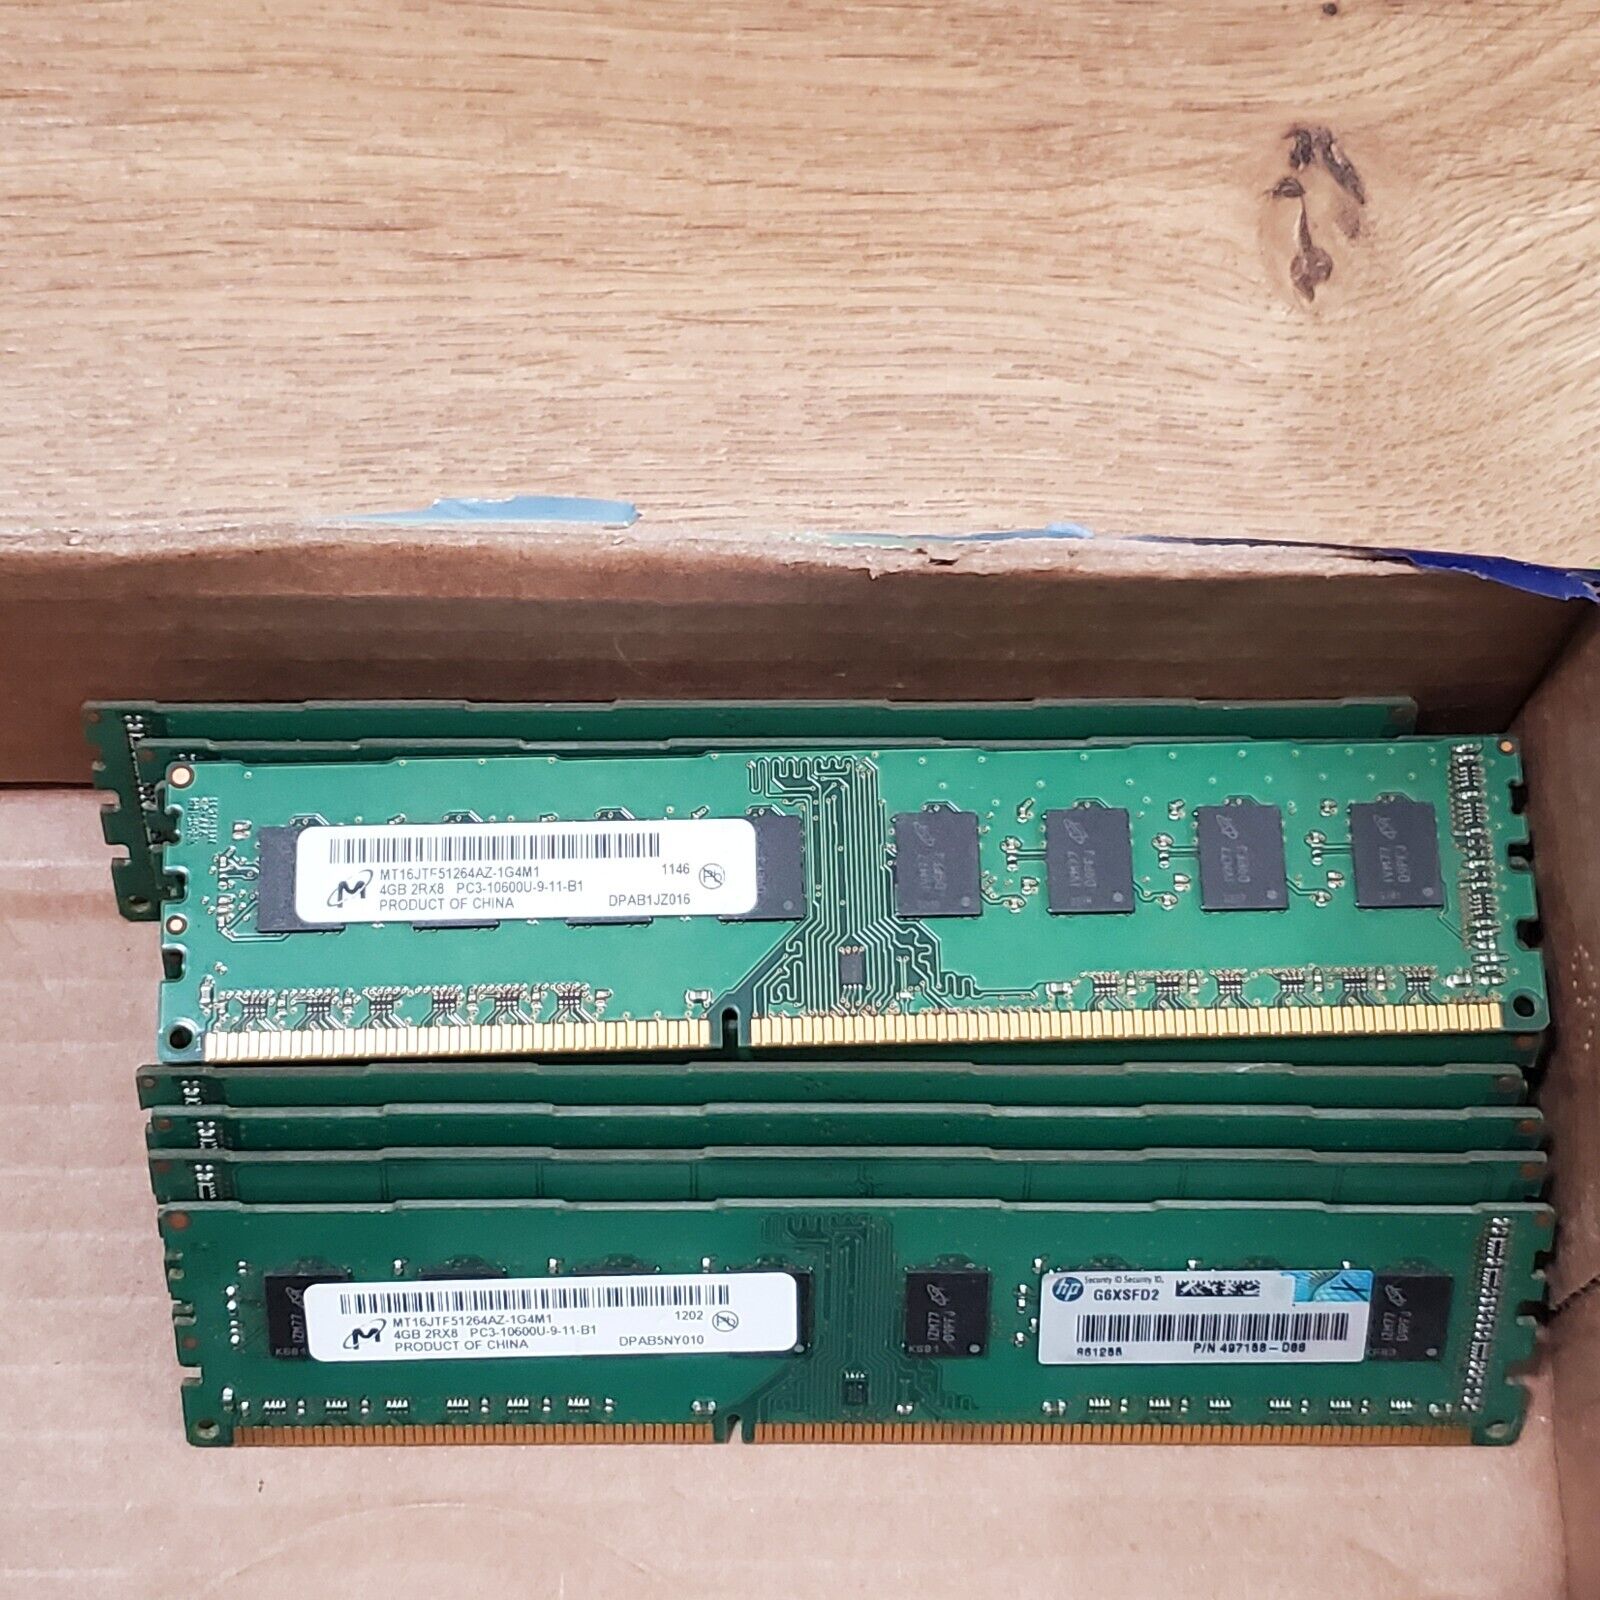 Lot of 10 Micron 4GB PC3-10600U NON ECC Desktop Memory DDR3 Chips double side